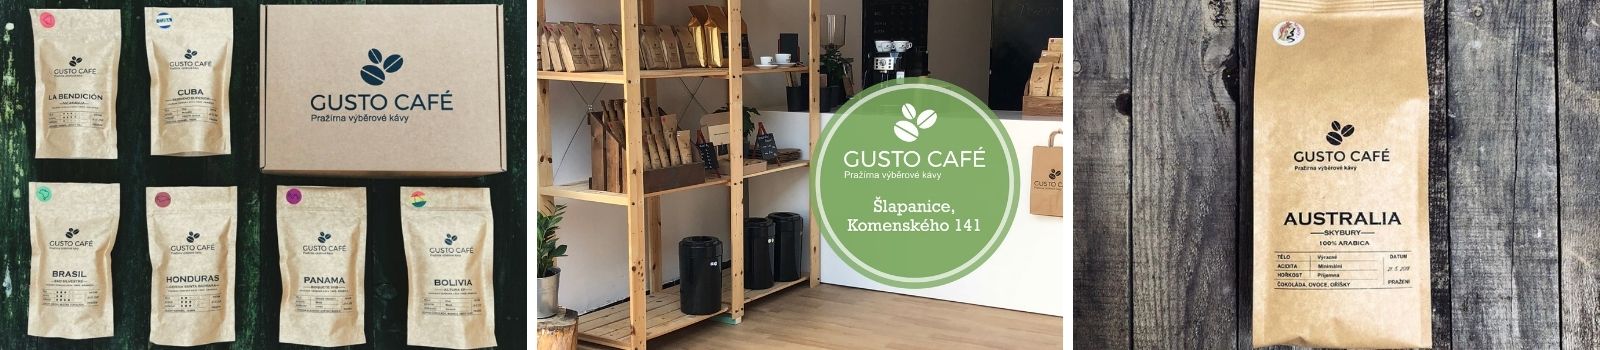 Gusto Cafe 1